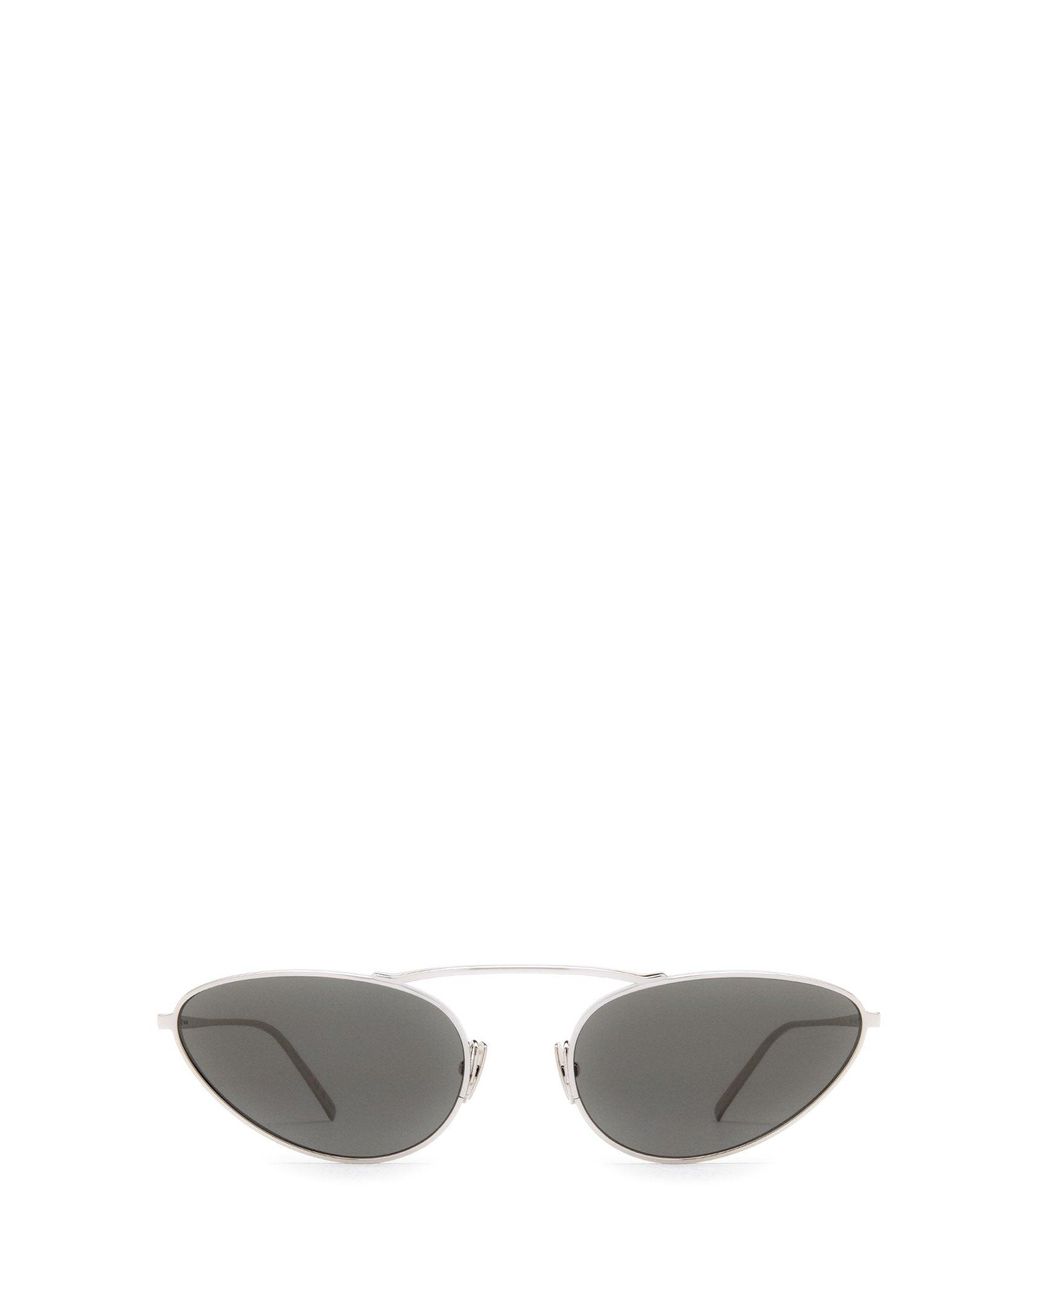 Saint Laurent Sunglasses in Silver - Save 51% Metallic Womens Sunglasses Saint Laurent Sunglasses 